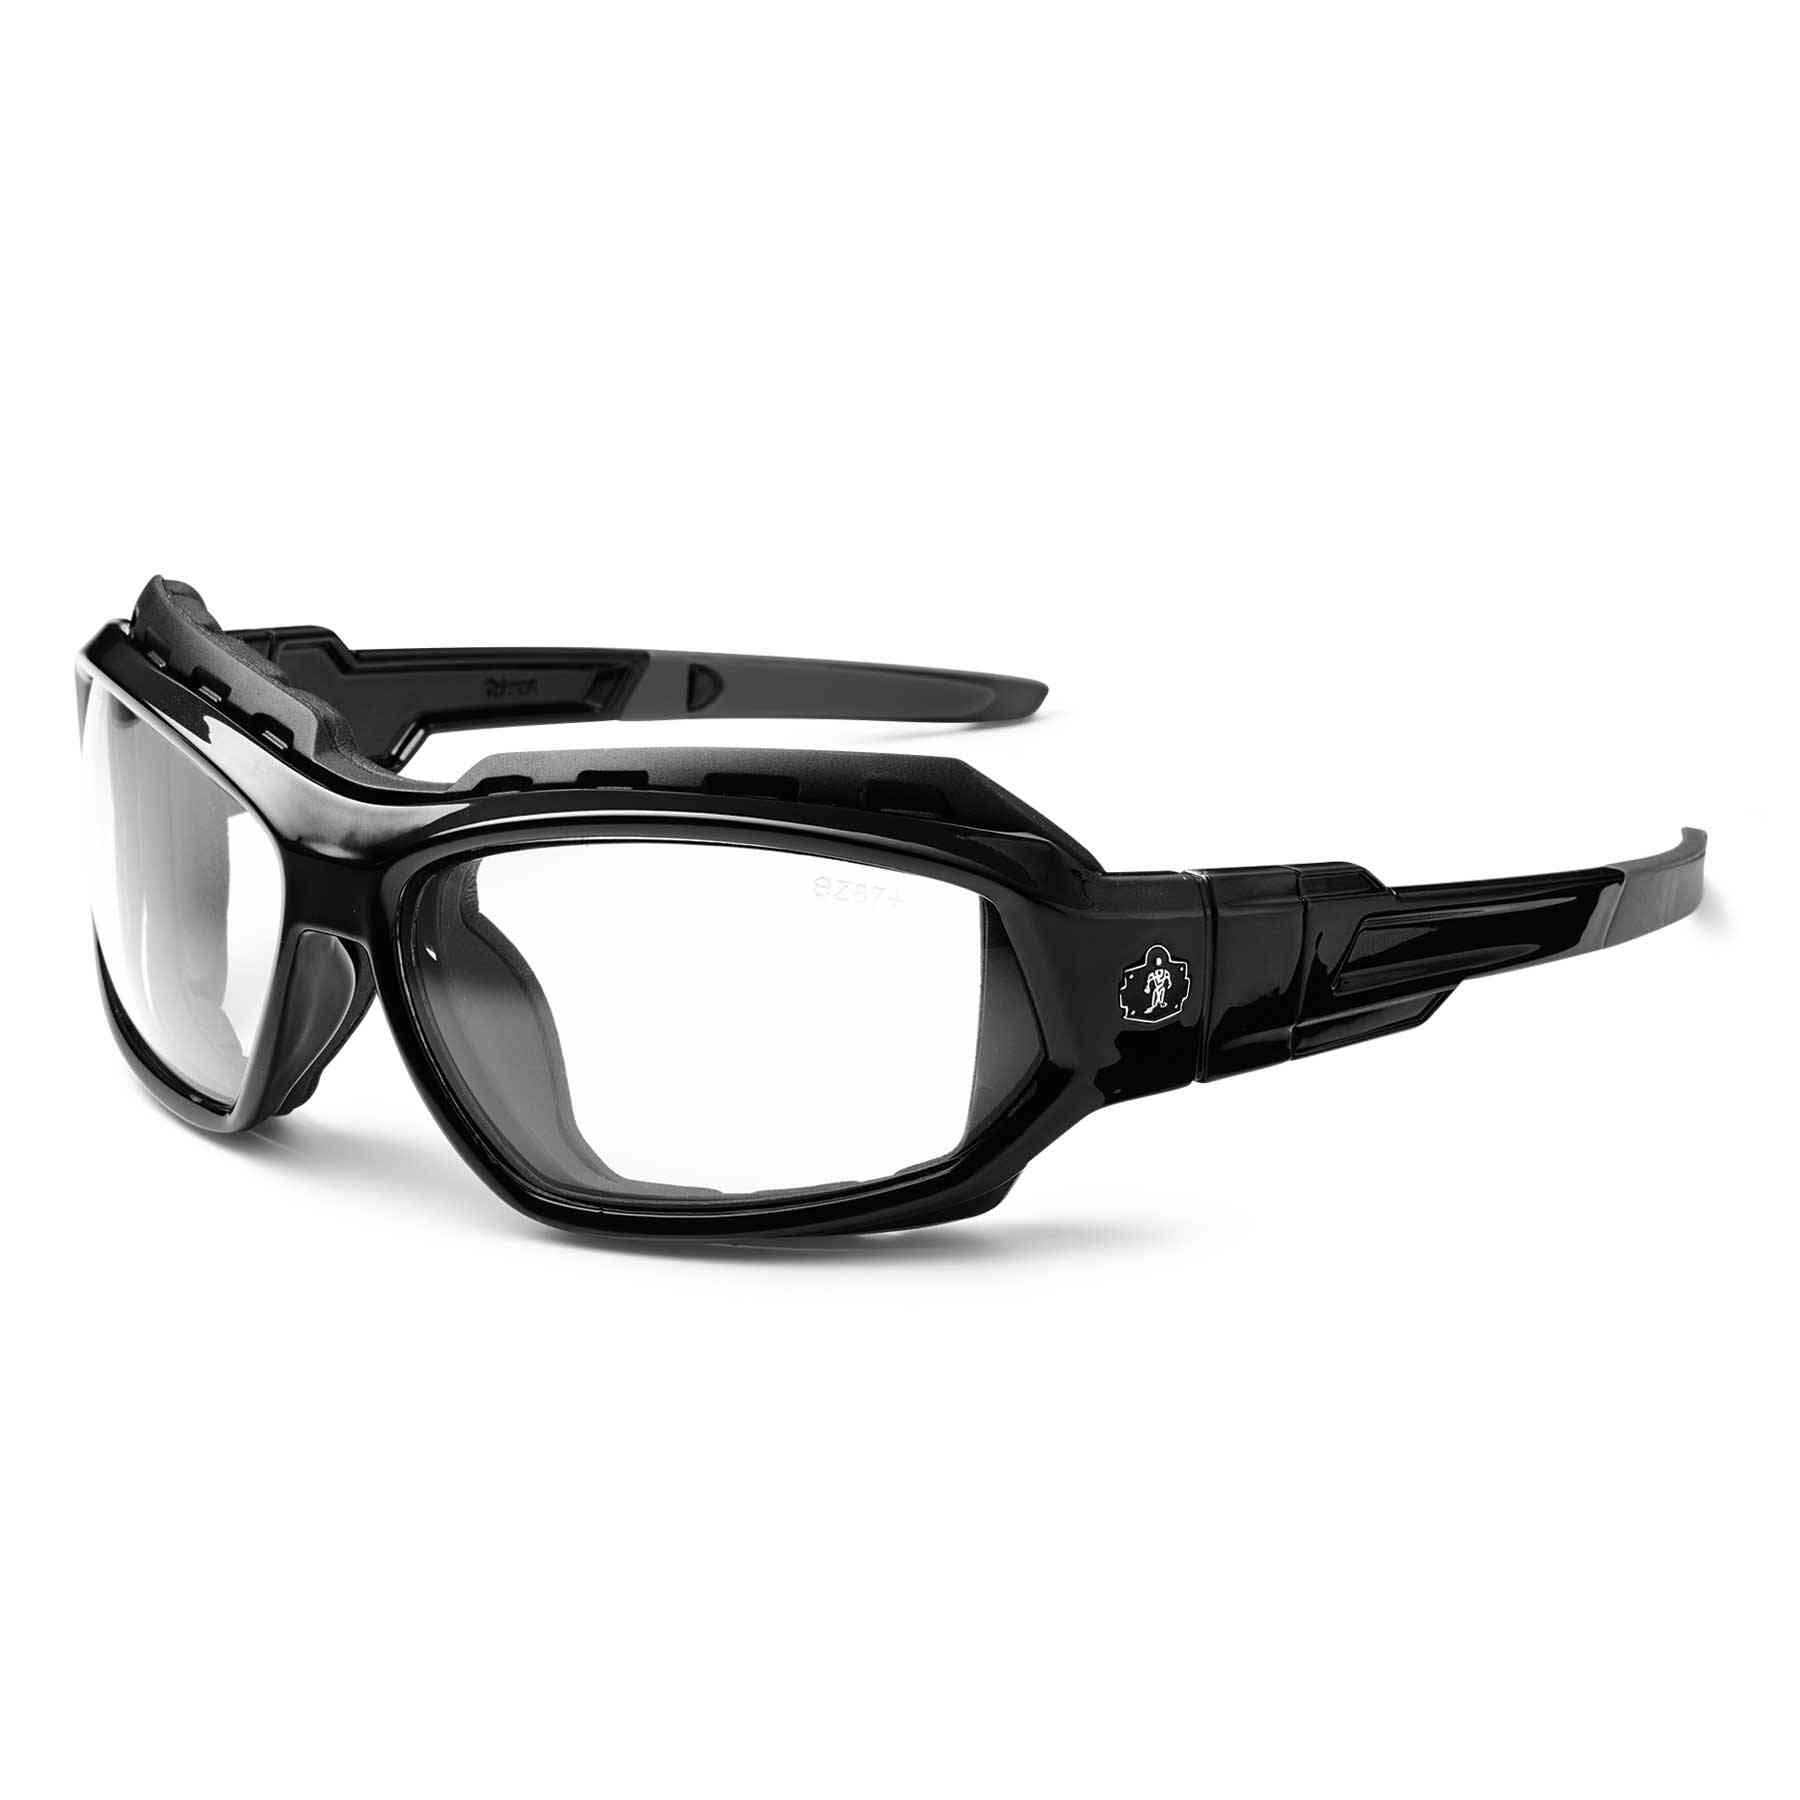 Safety Glasses Goggles Anti Fog Lens Sport Work Eyewear Non-Slip Temple Sleeve 